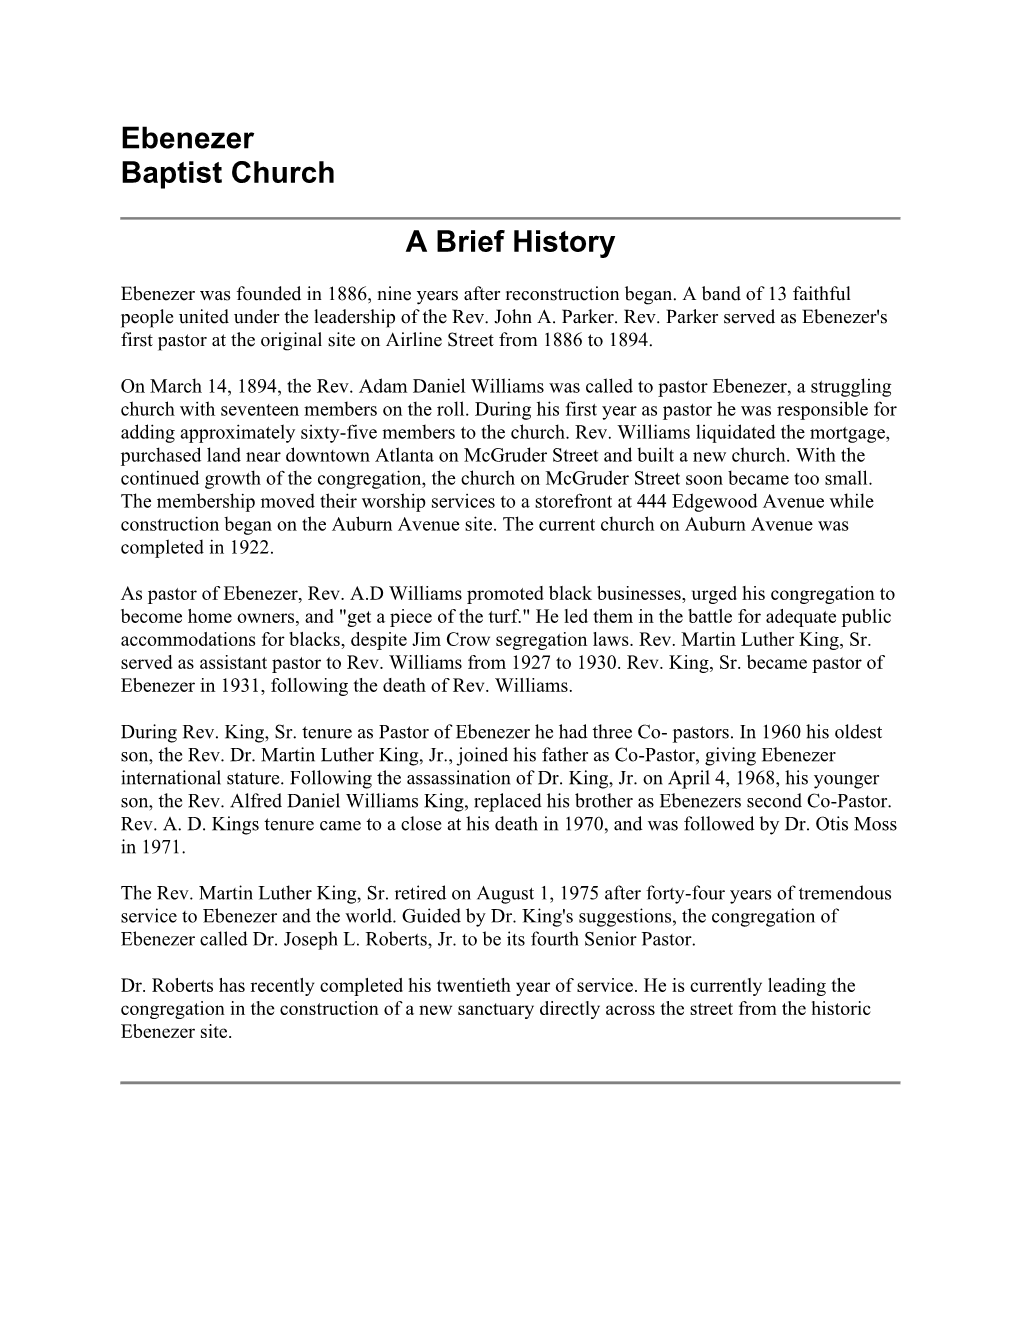 Ebenezer Baptist Church a Brief History